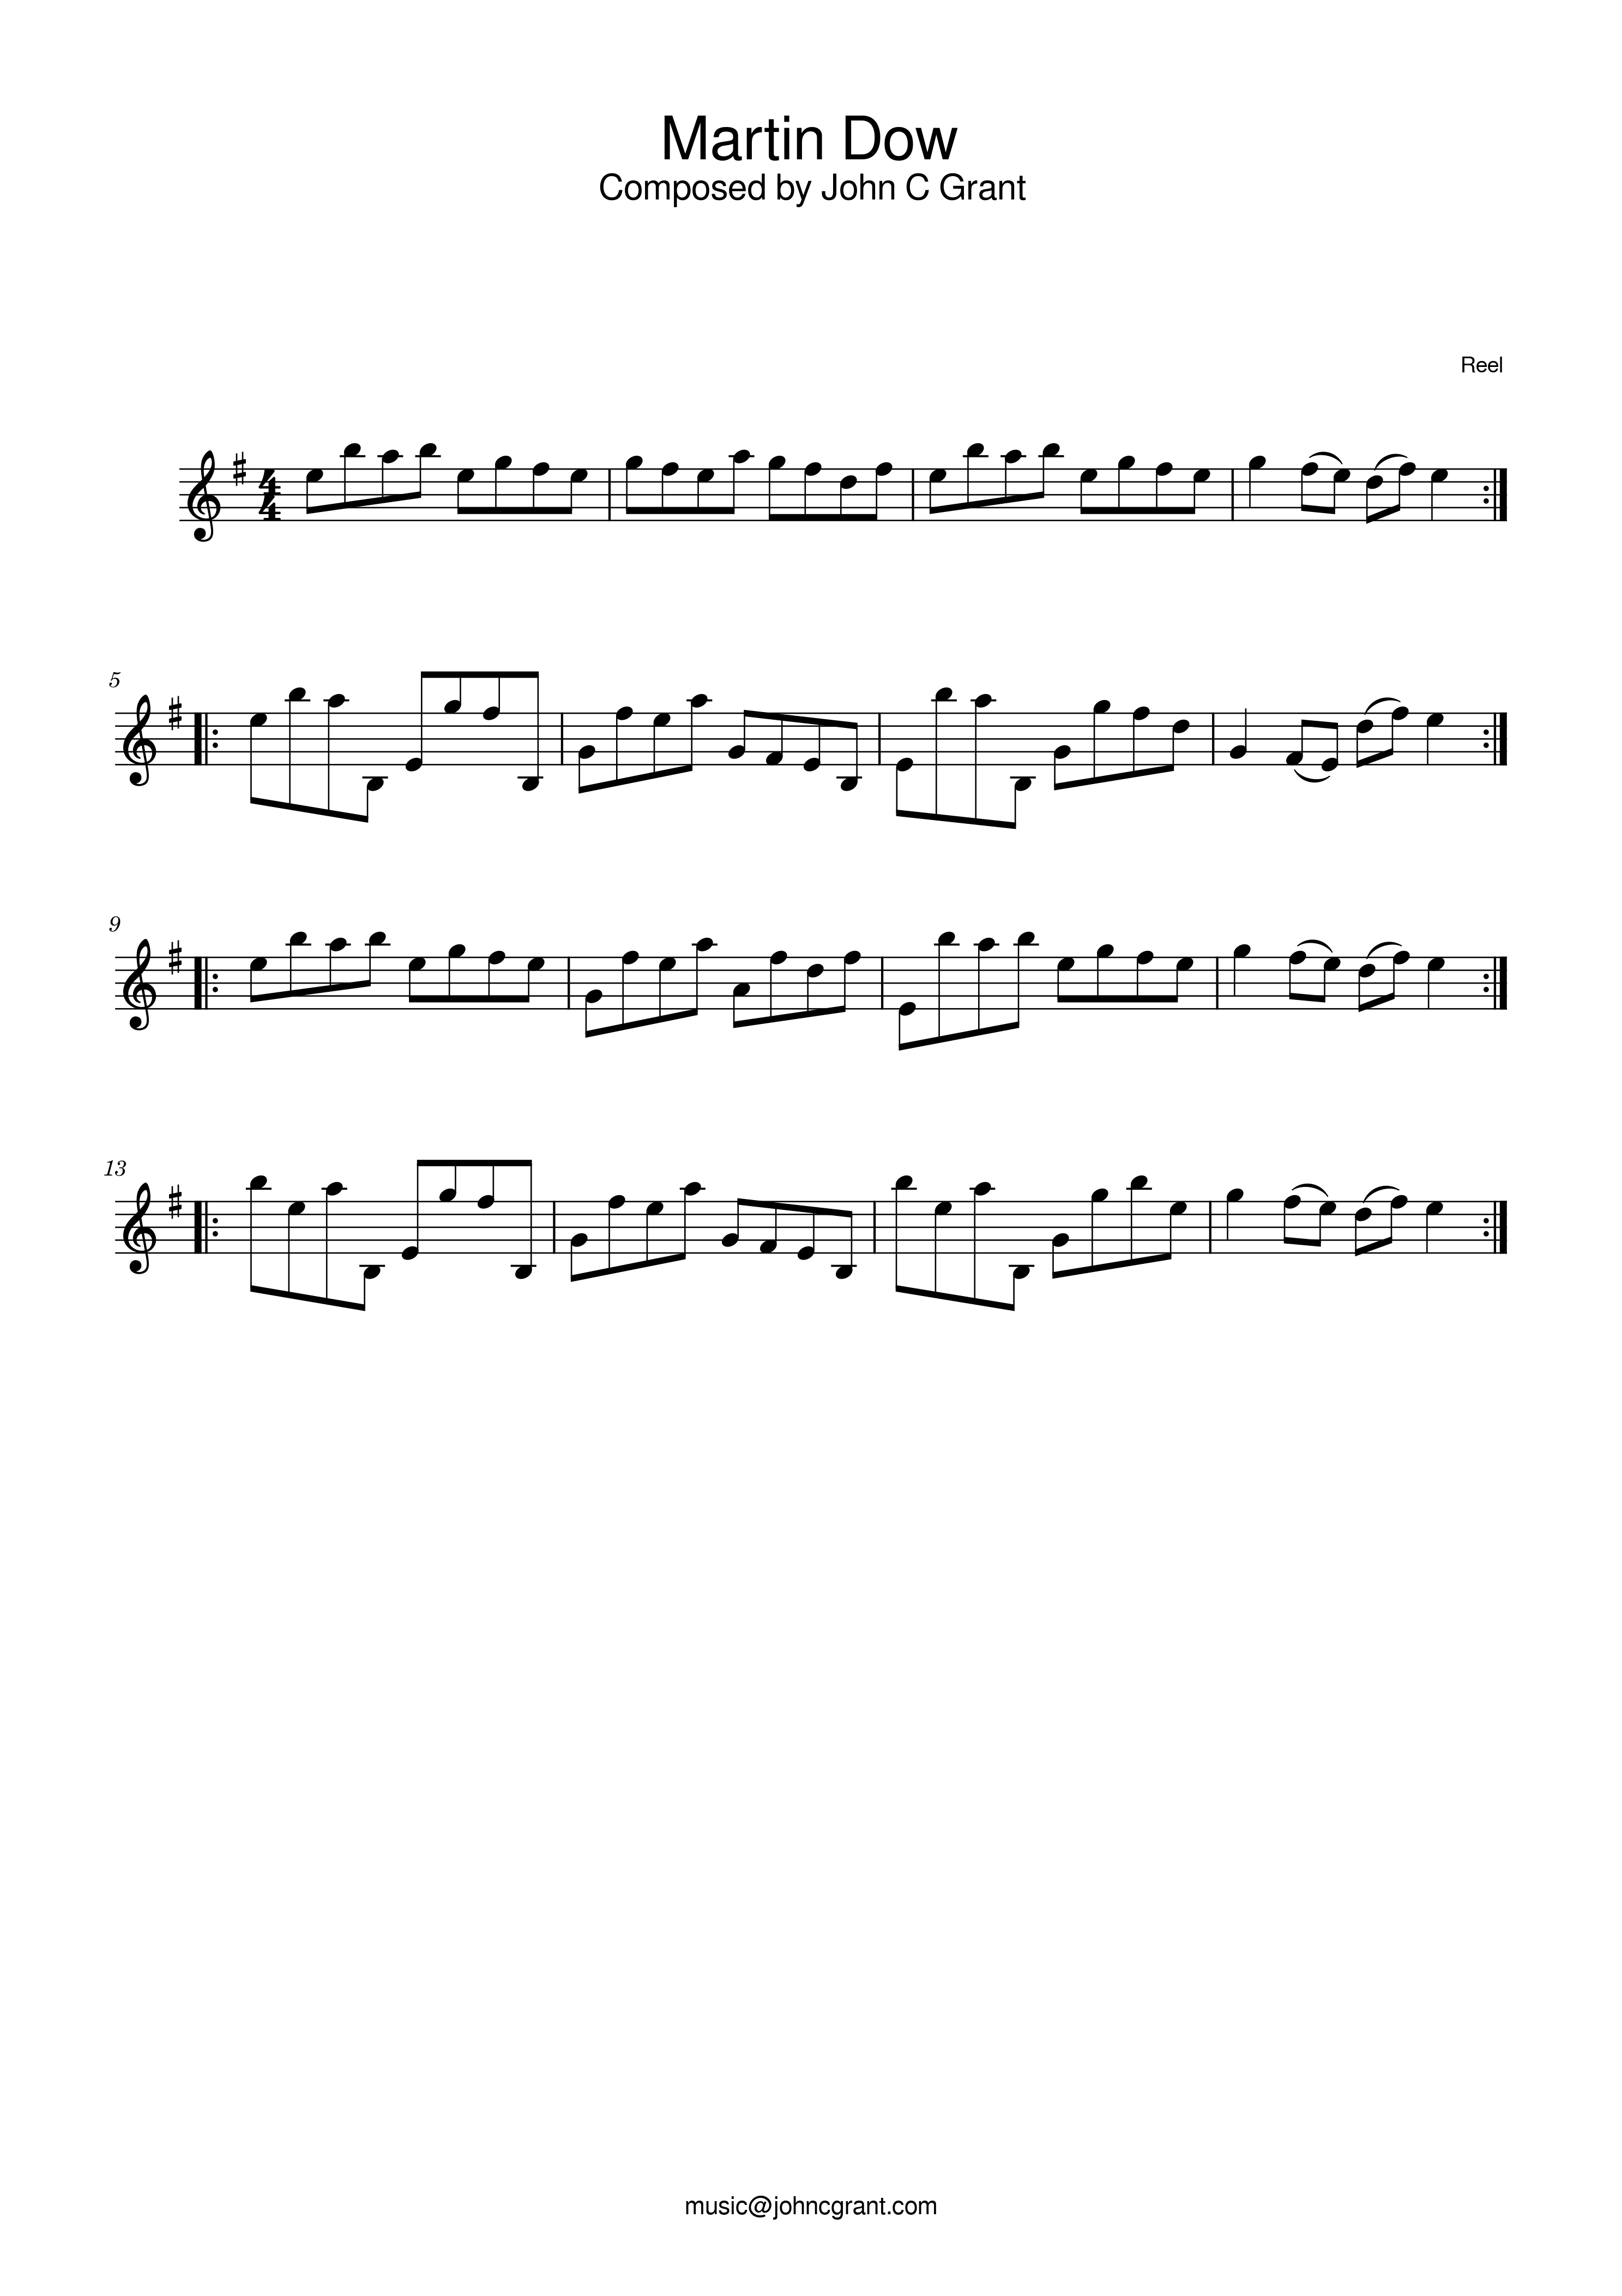 Martin Dow - Composed by John C Grant (https://johncgrant.com). Traditional composer from Kilmarnock, Ayrshire, Scotland.